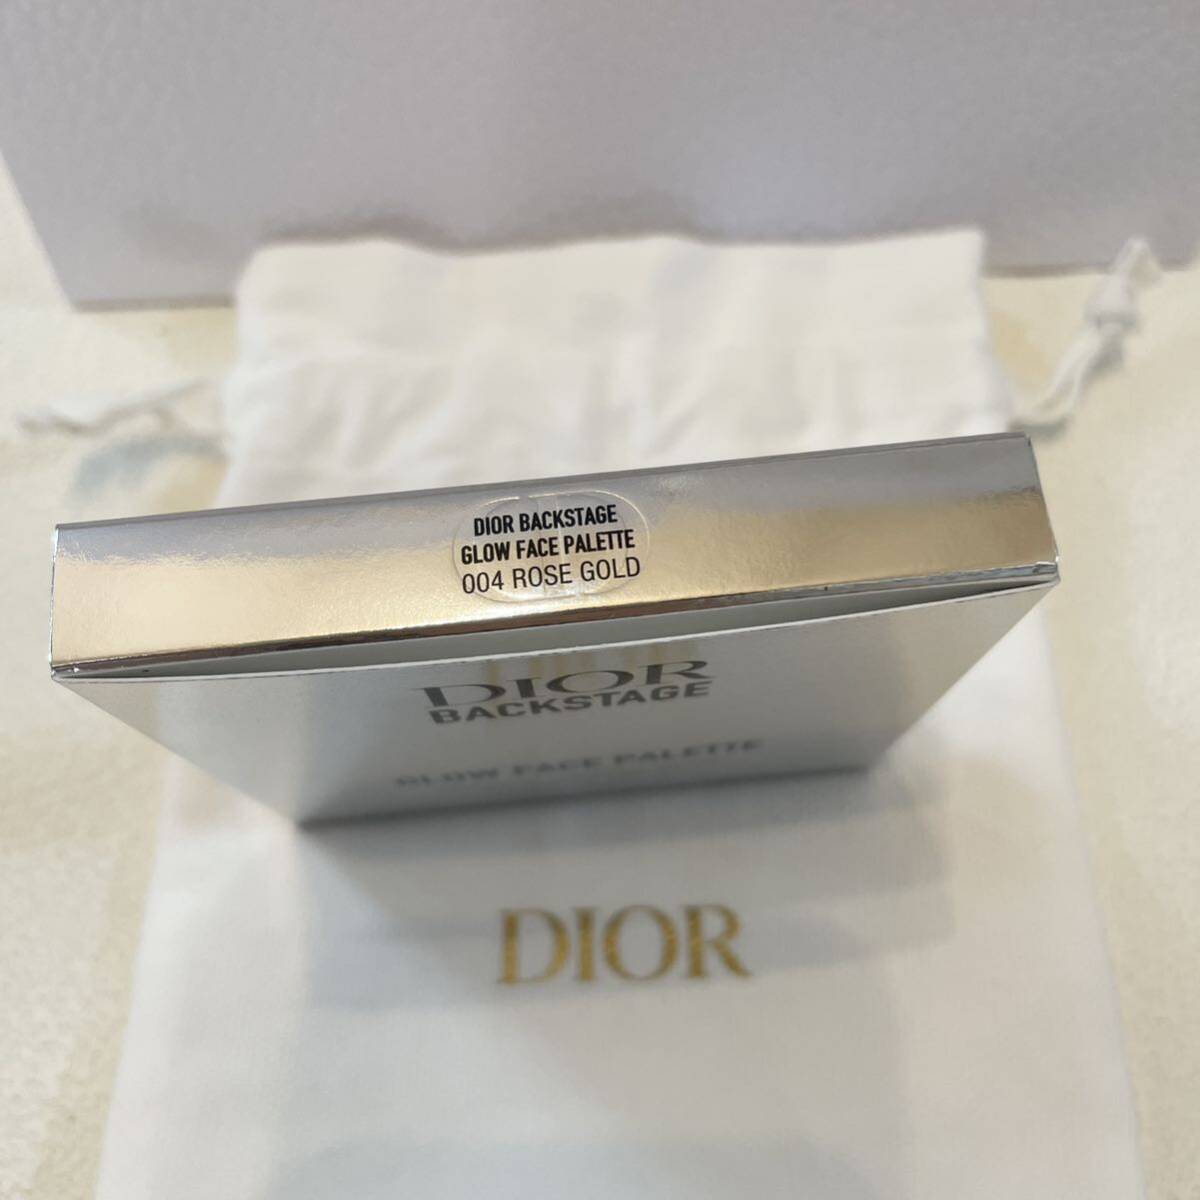  Dior задний stage лицо Glo u Palette 004 rose Gold 